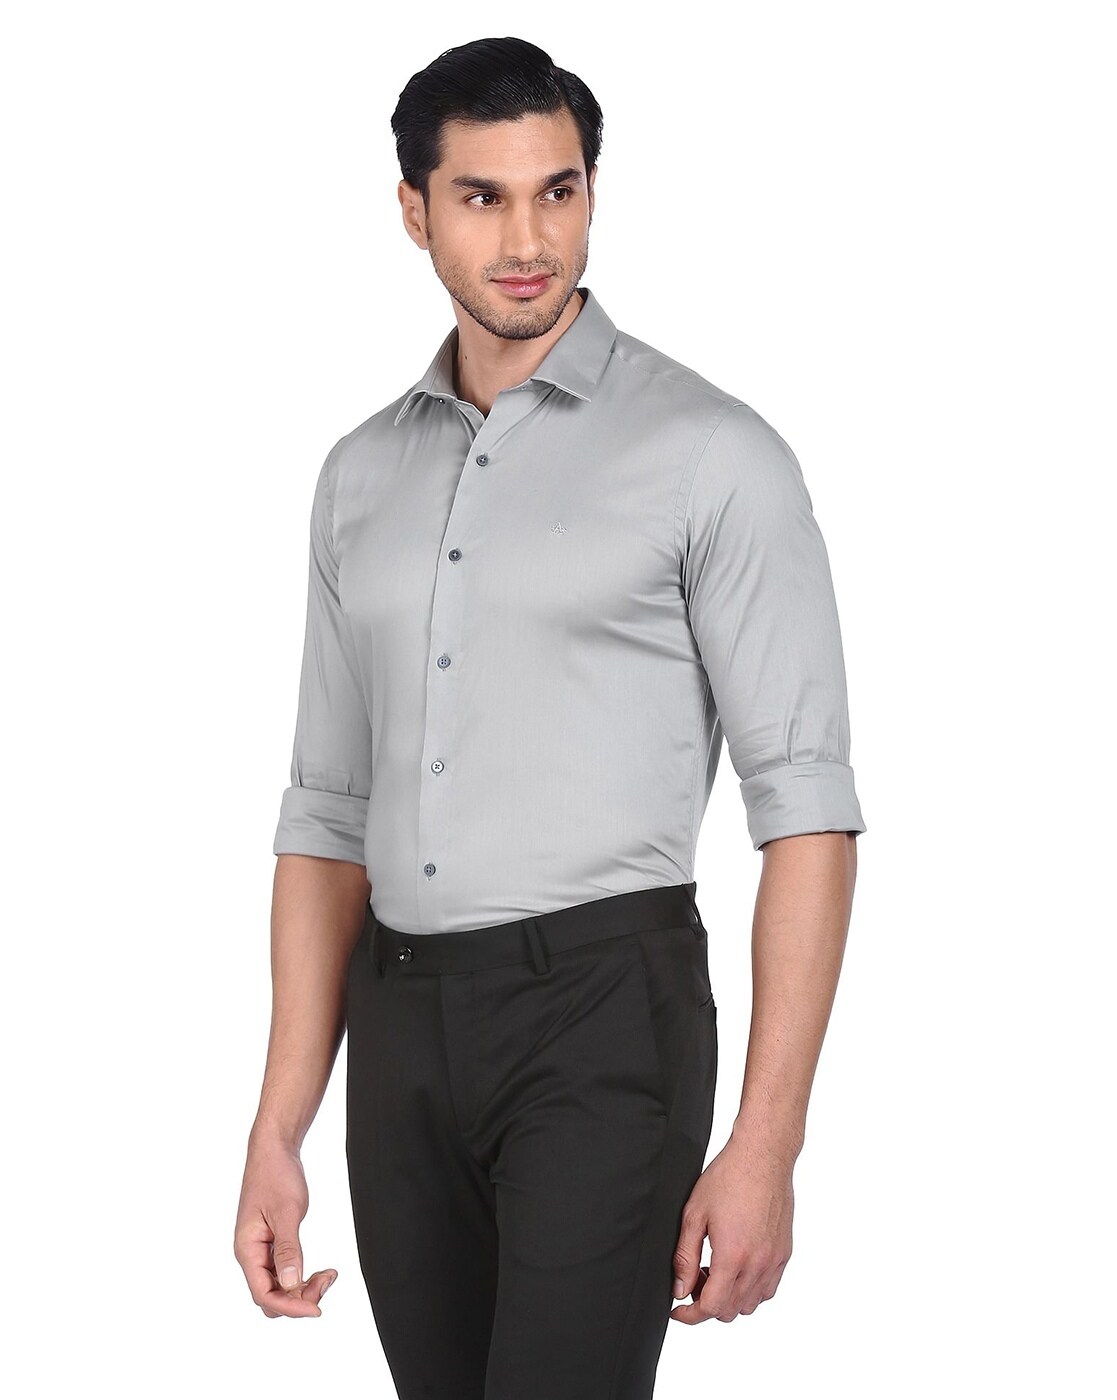 Black Pant shirt Gray Blazer | Pant shirt, Shirts grey, Grey blazer